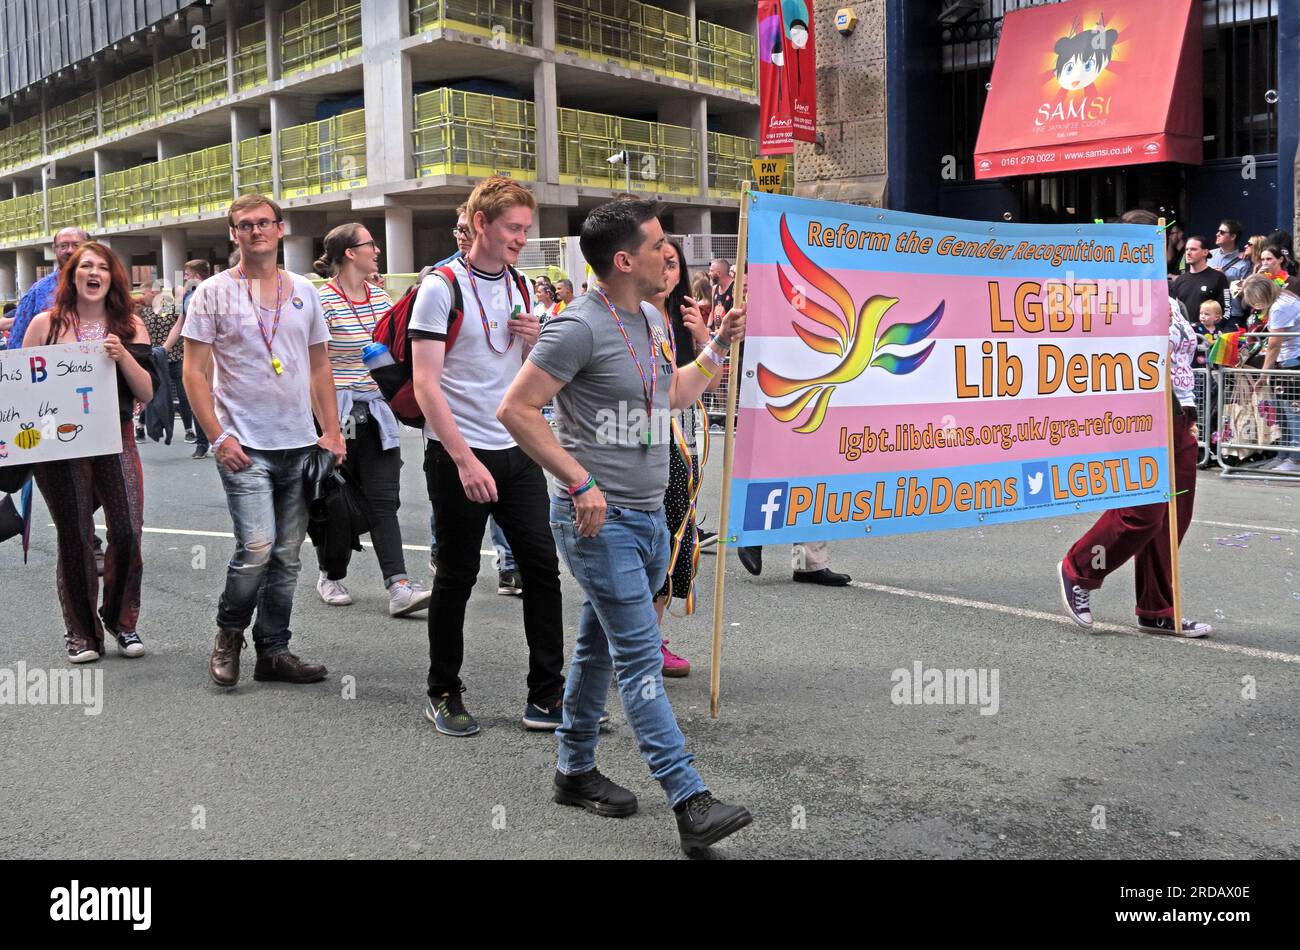 LGBT+ Lib Dems at Manchester Pride Festival parade, 36 Whitworth Street, Manchester,England,UK, M1 3NR Stock Photo